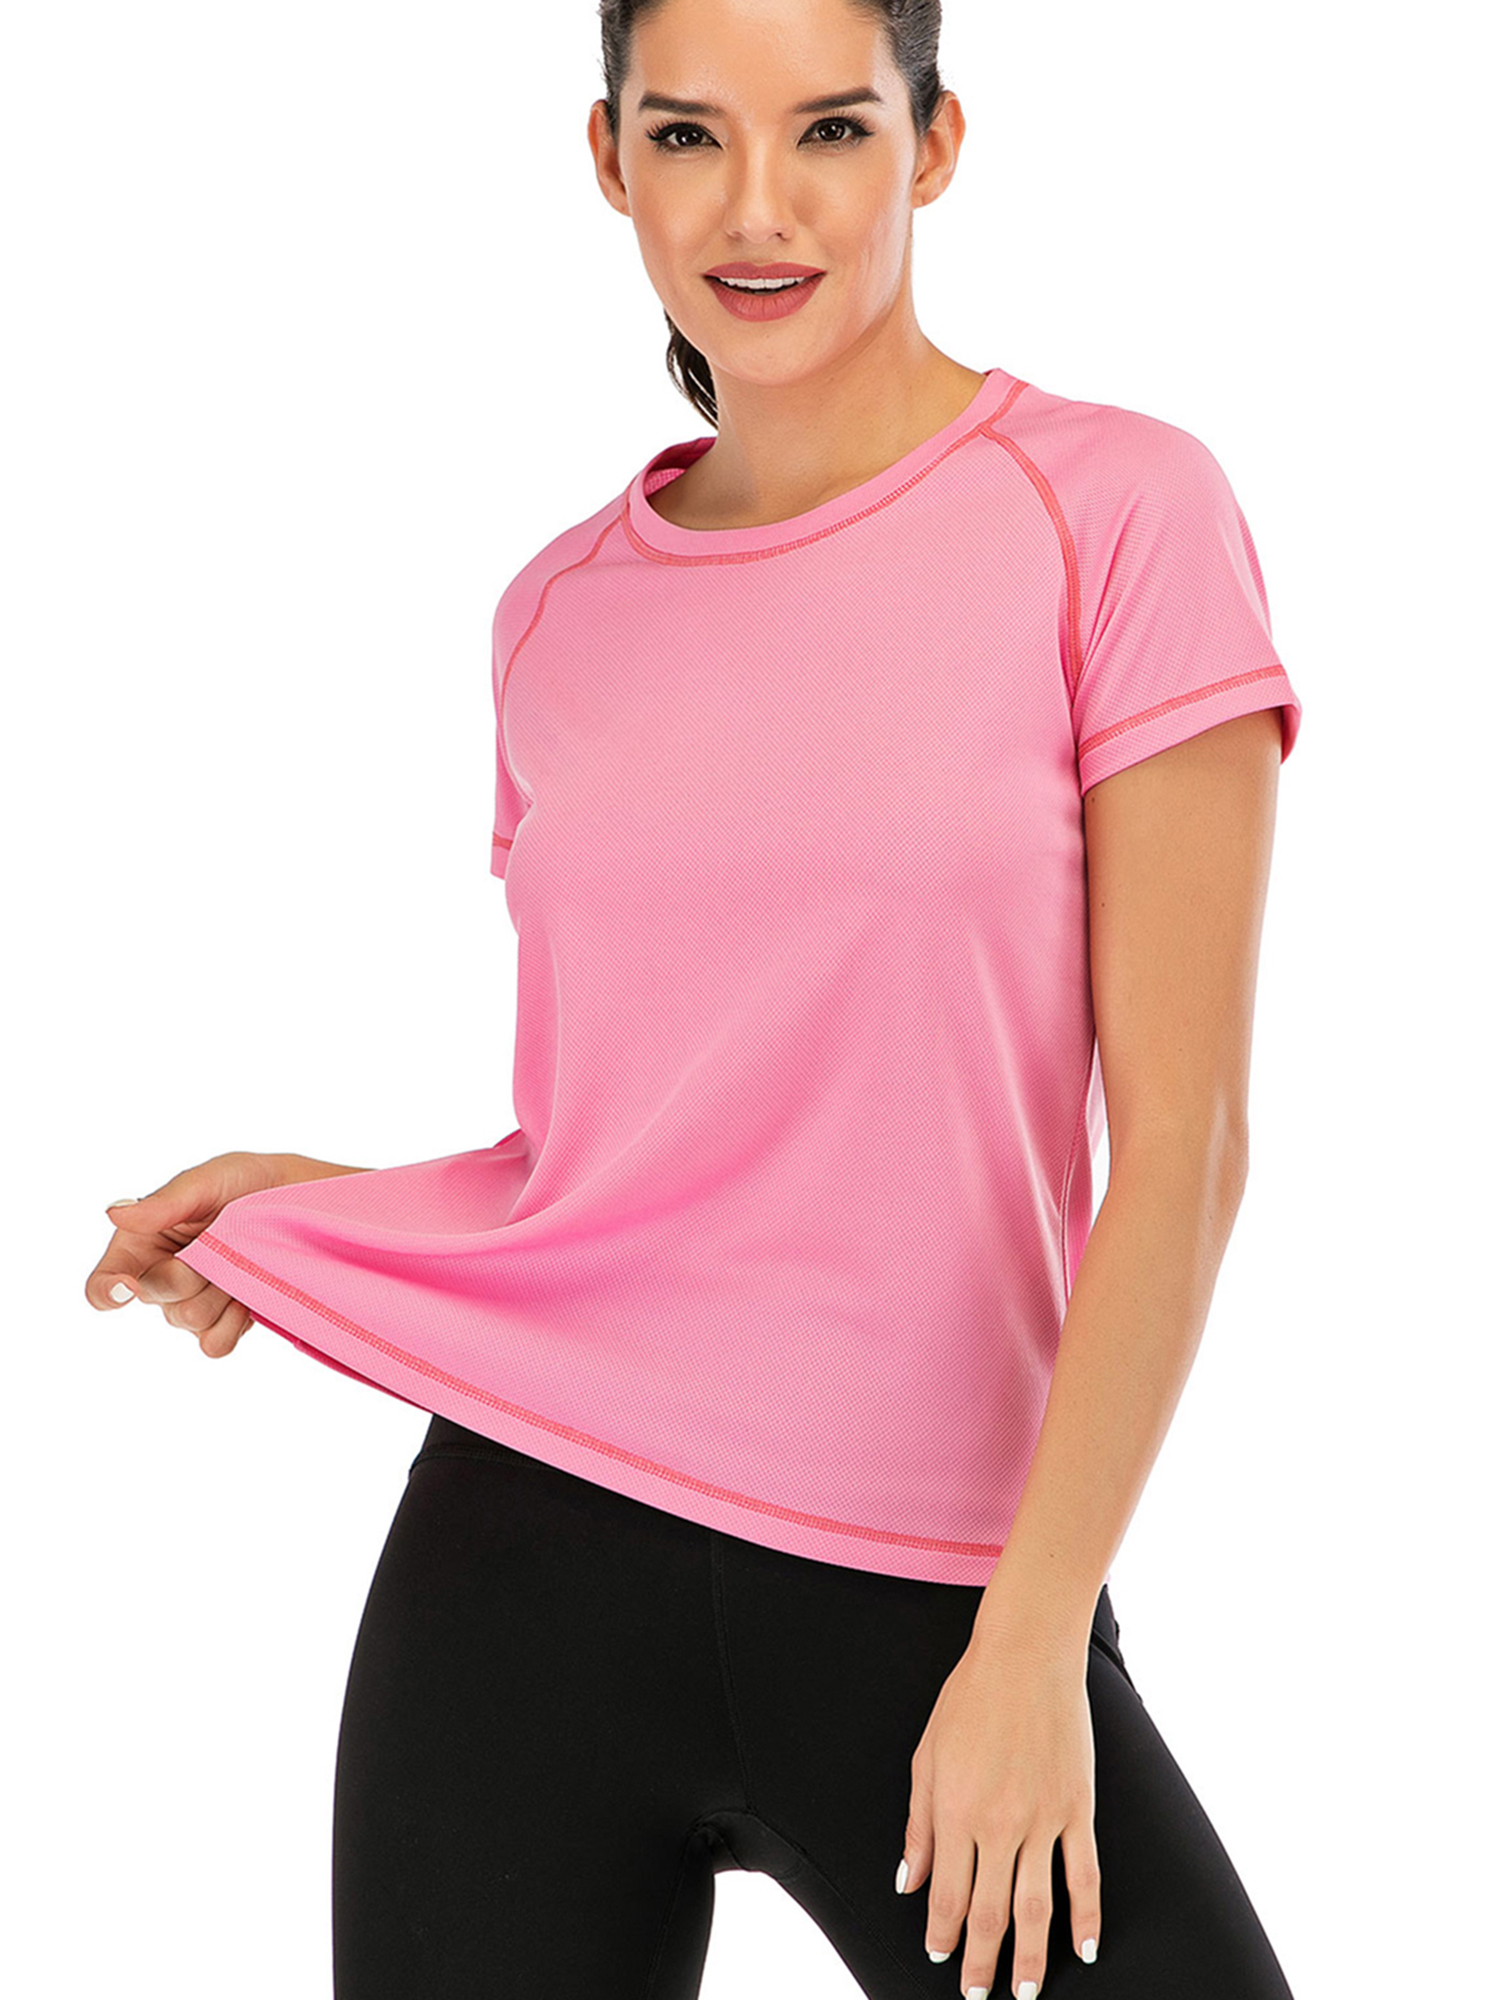 OMANTIC Womens Short Sleeve Running Athletic Sun Shirts Workout Yoga Tops Plain T-Shirt Hiking Fishing 